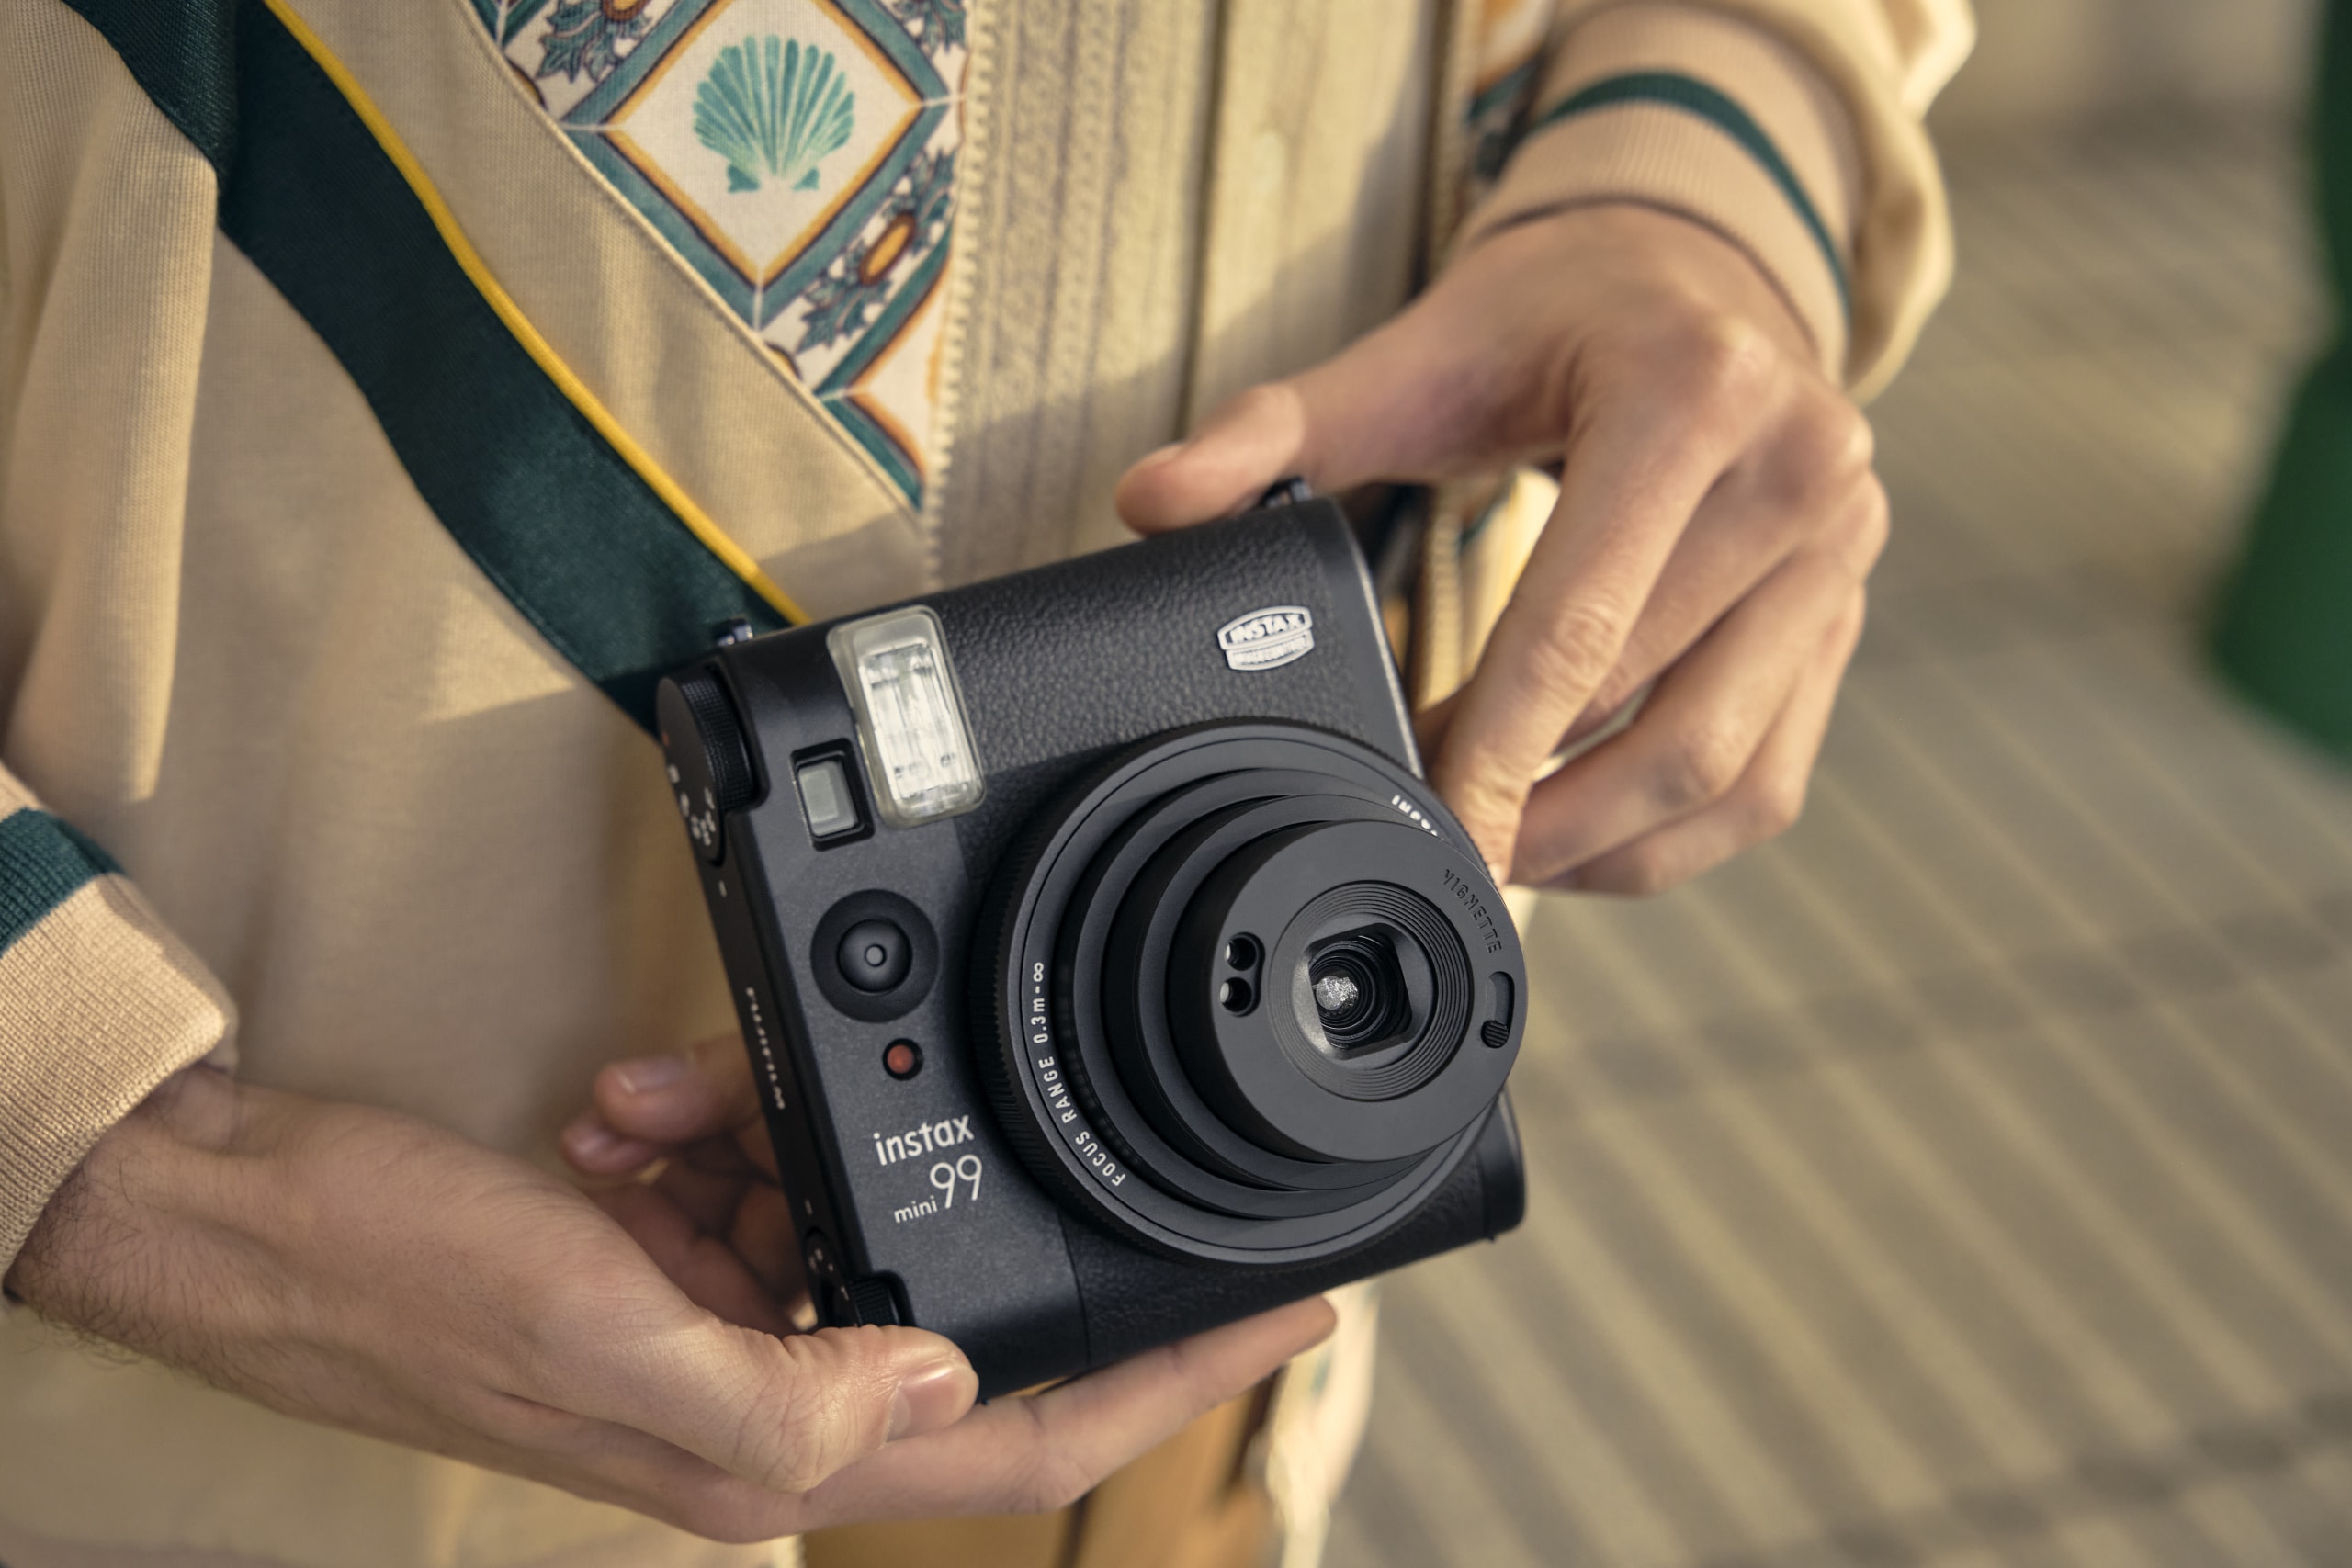 Fujifilm 推出全新即影即有相機 instax mini 99 